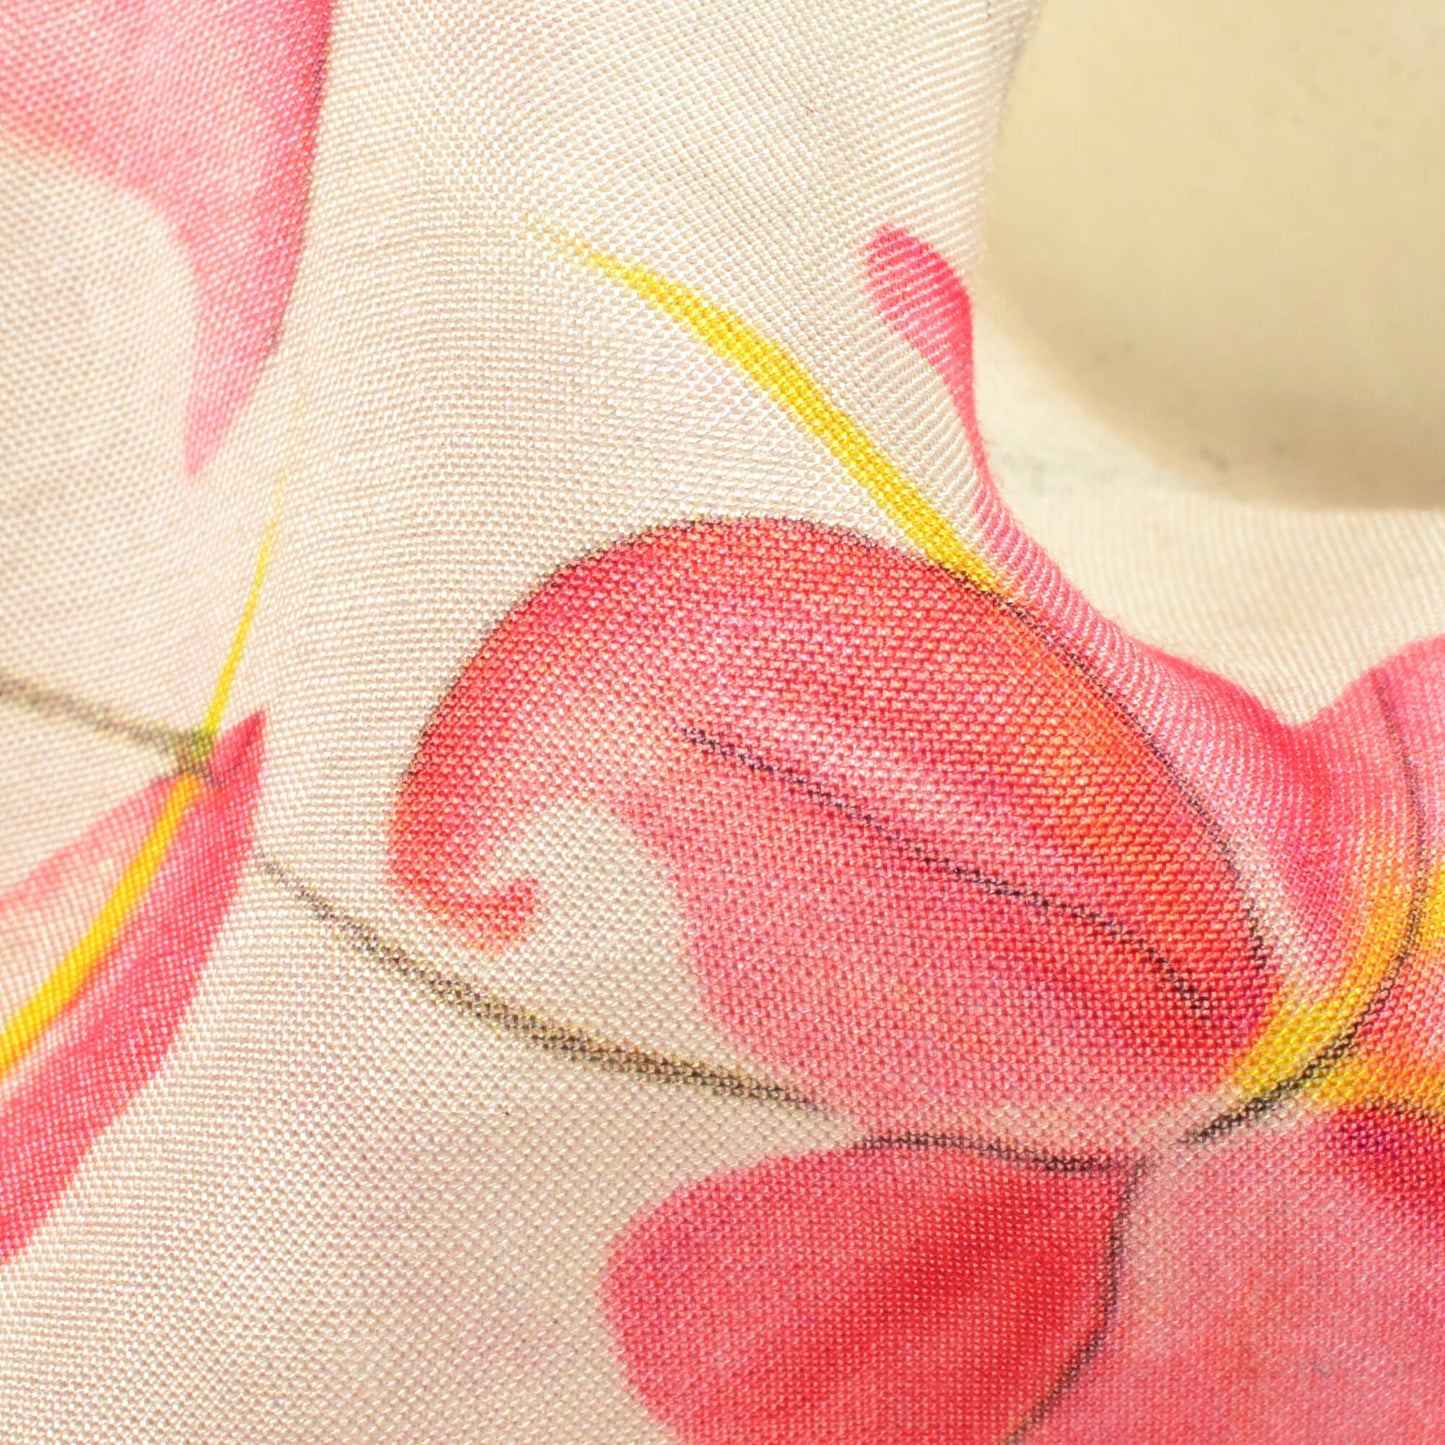 Cream And Taffy Pink Floral Pattern Digital Print Viscose Muslin Fabric